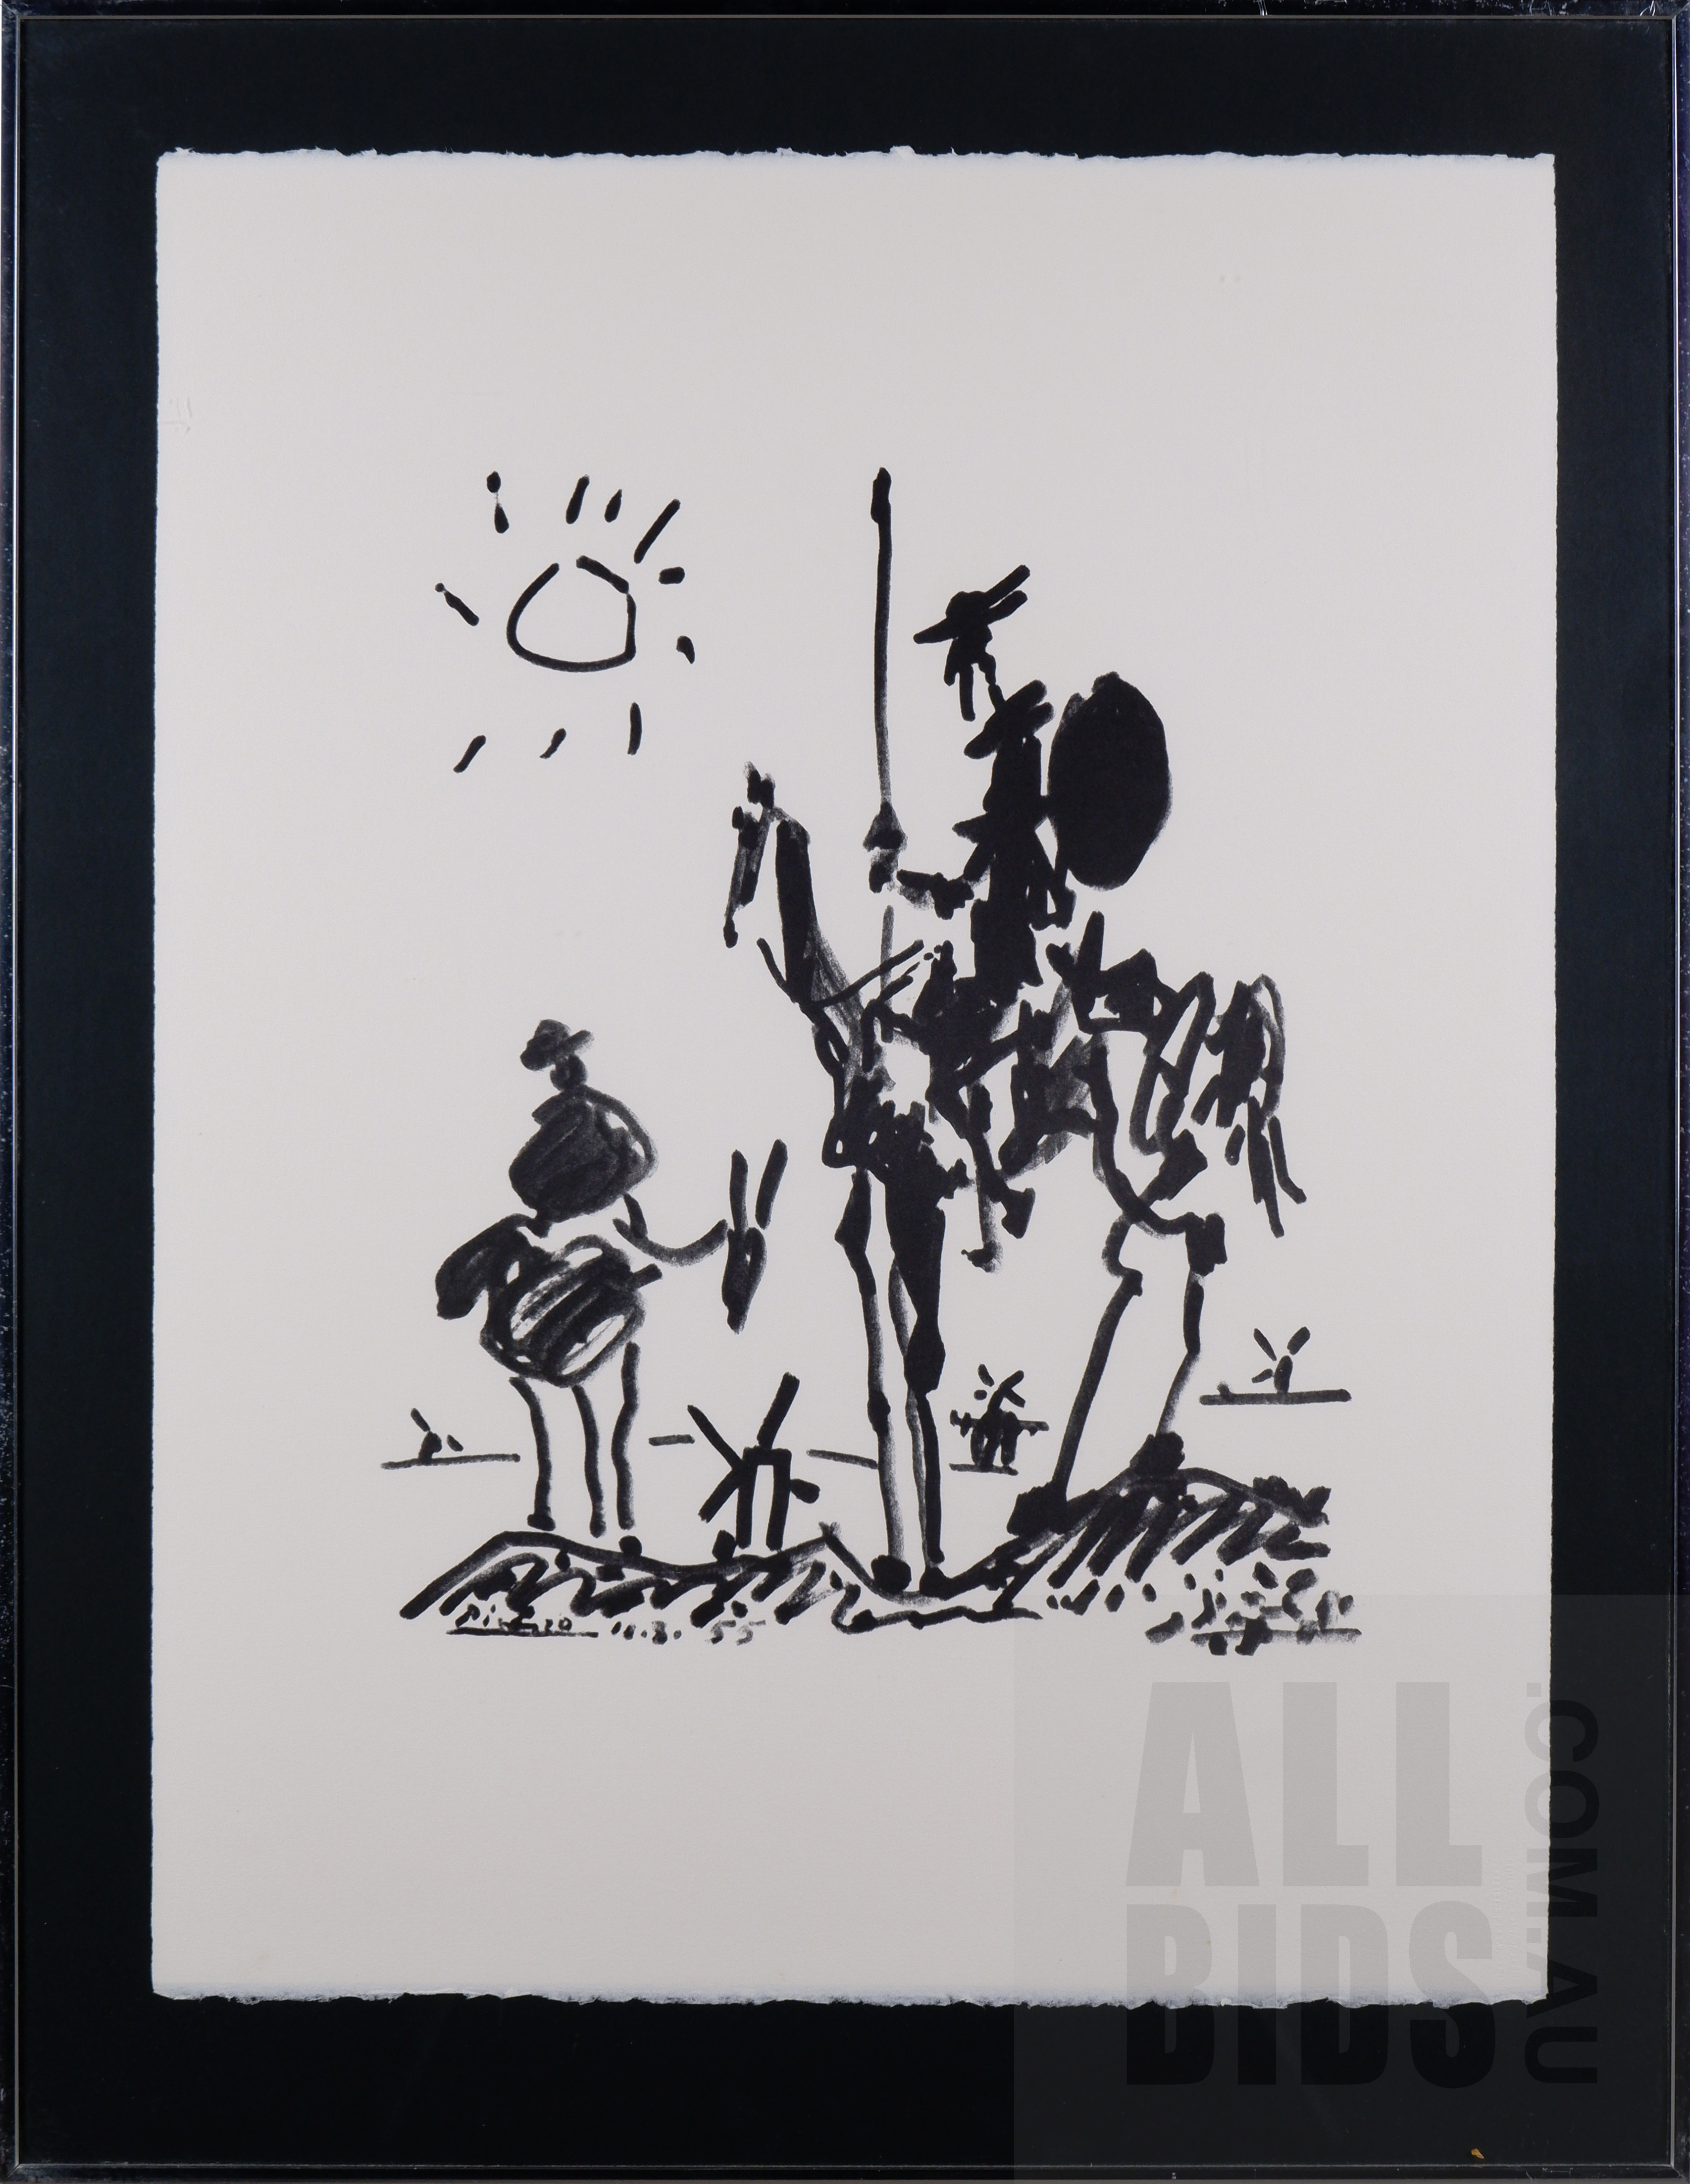 'Pablo Picasso (1881-1973, Spanish), Don Quixote 1955, Lithograph, 66 x 50 cm (sheet size)'